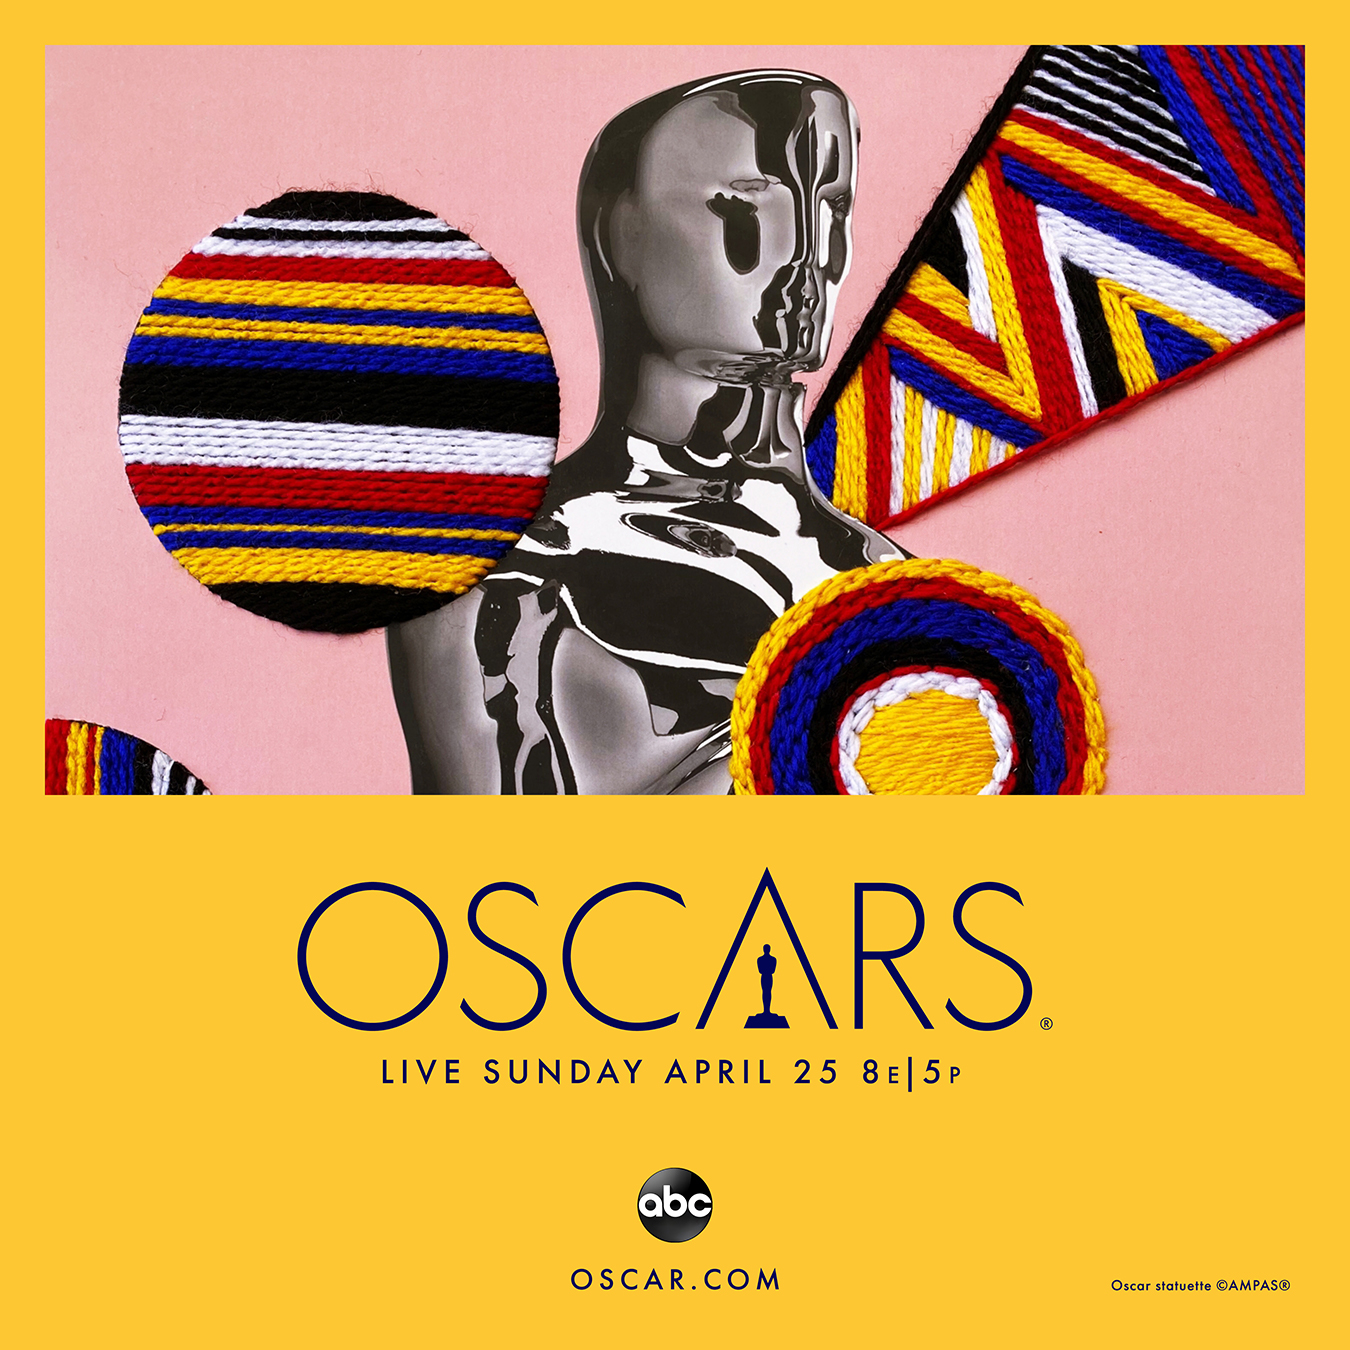 93rd Oscars’ campaign art by Victoria Villasana